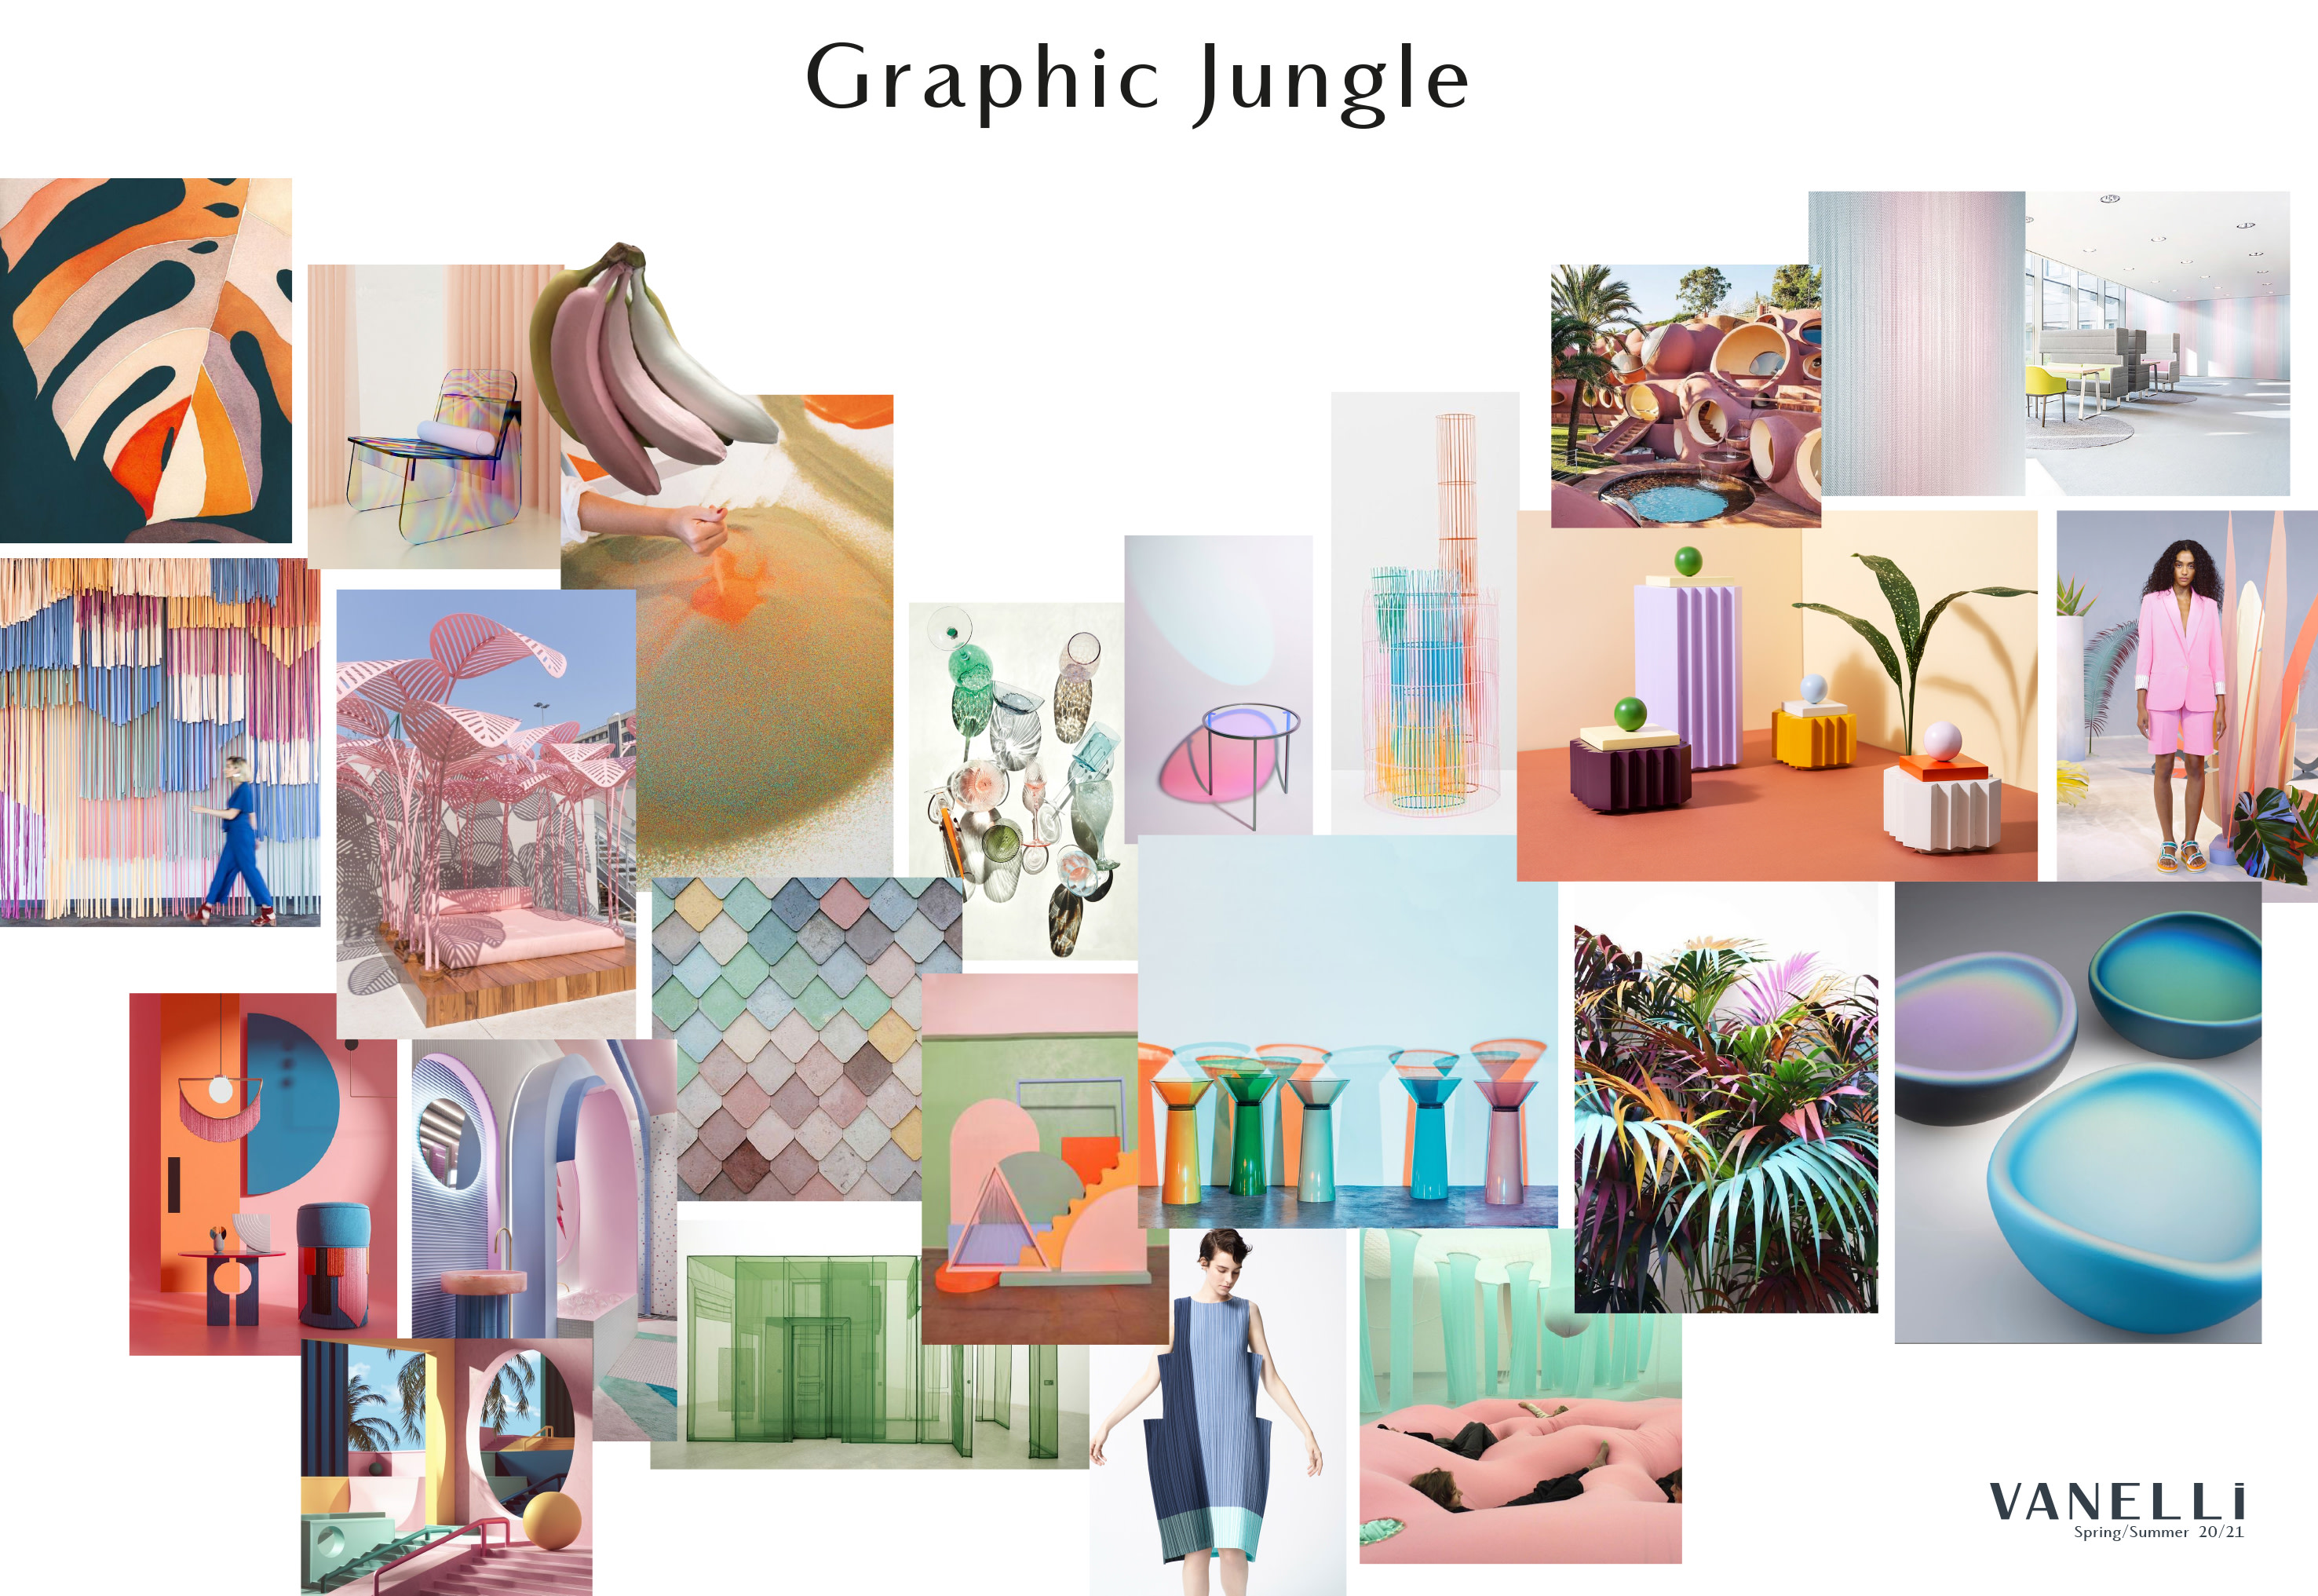 Vanelli Textile Our Stories - Graphic jungle